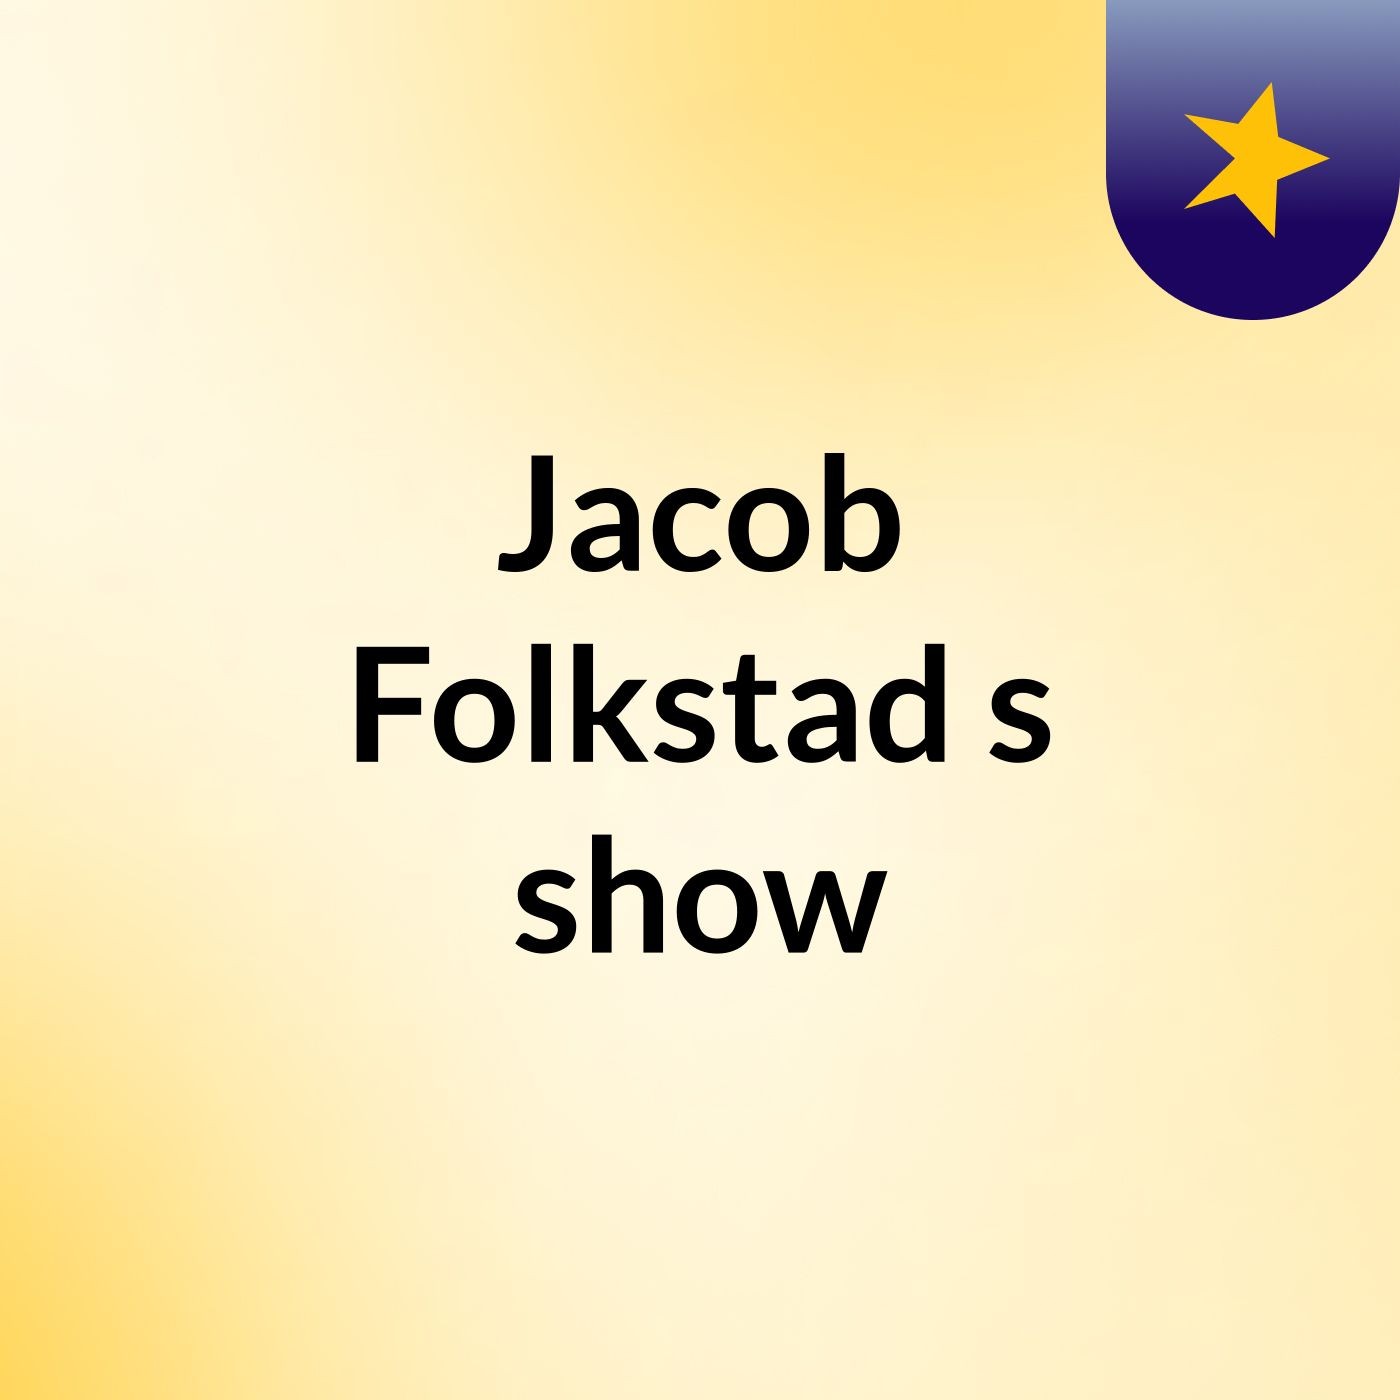 Jacob Folkstad's show